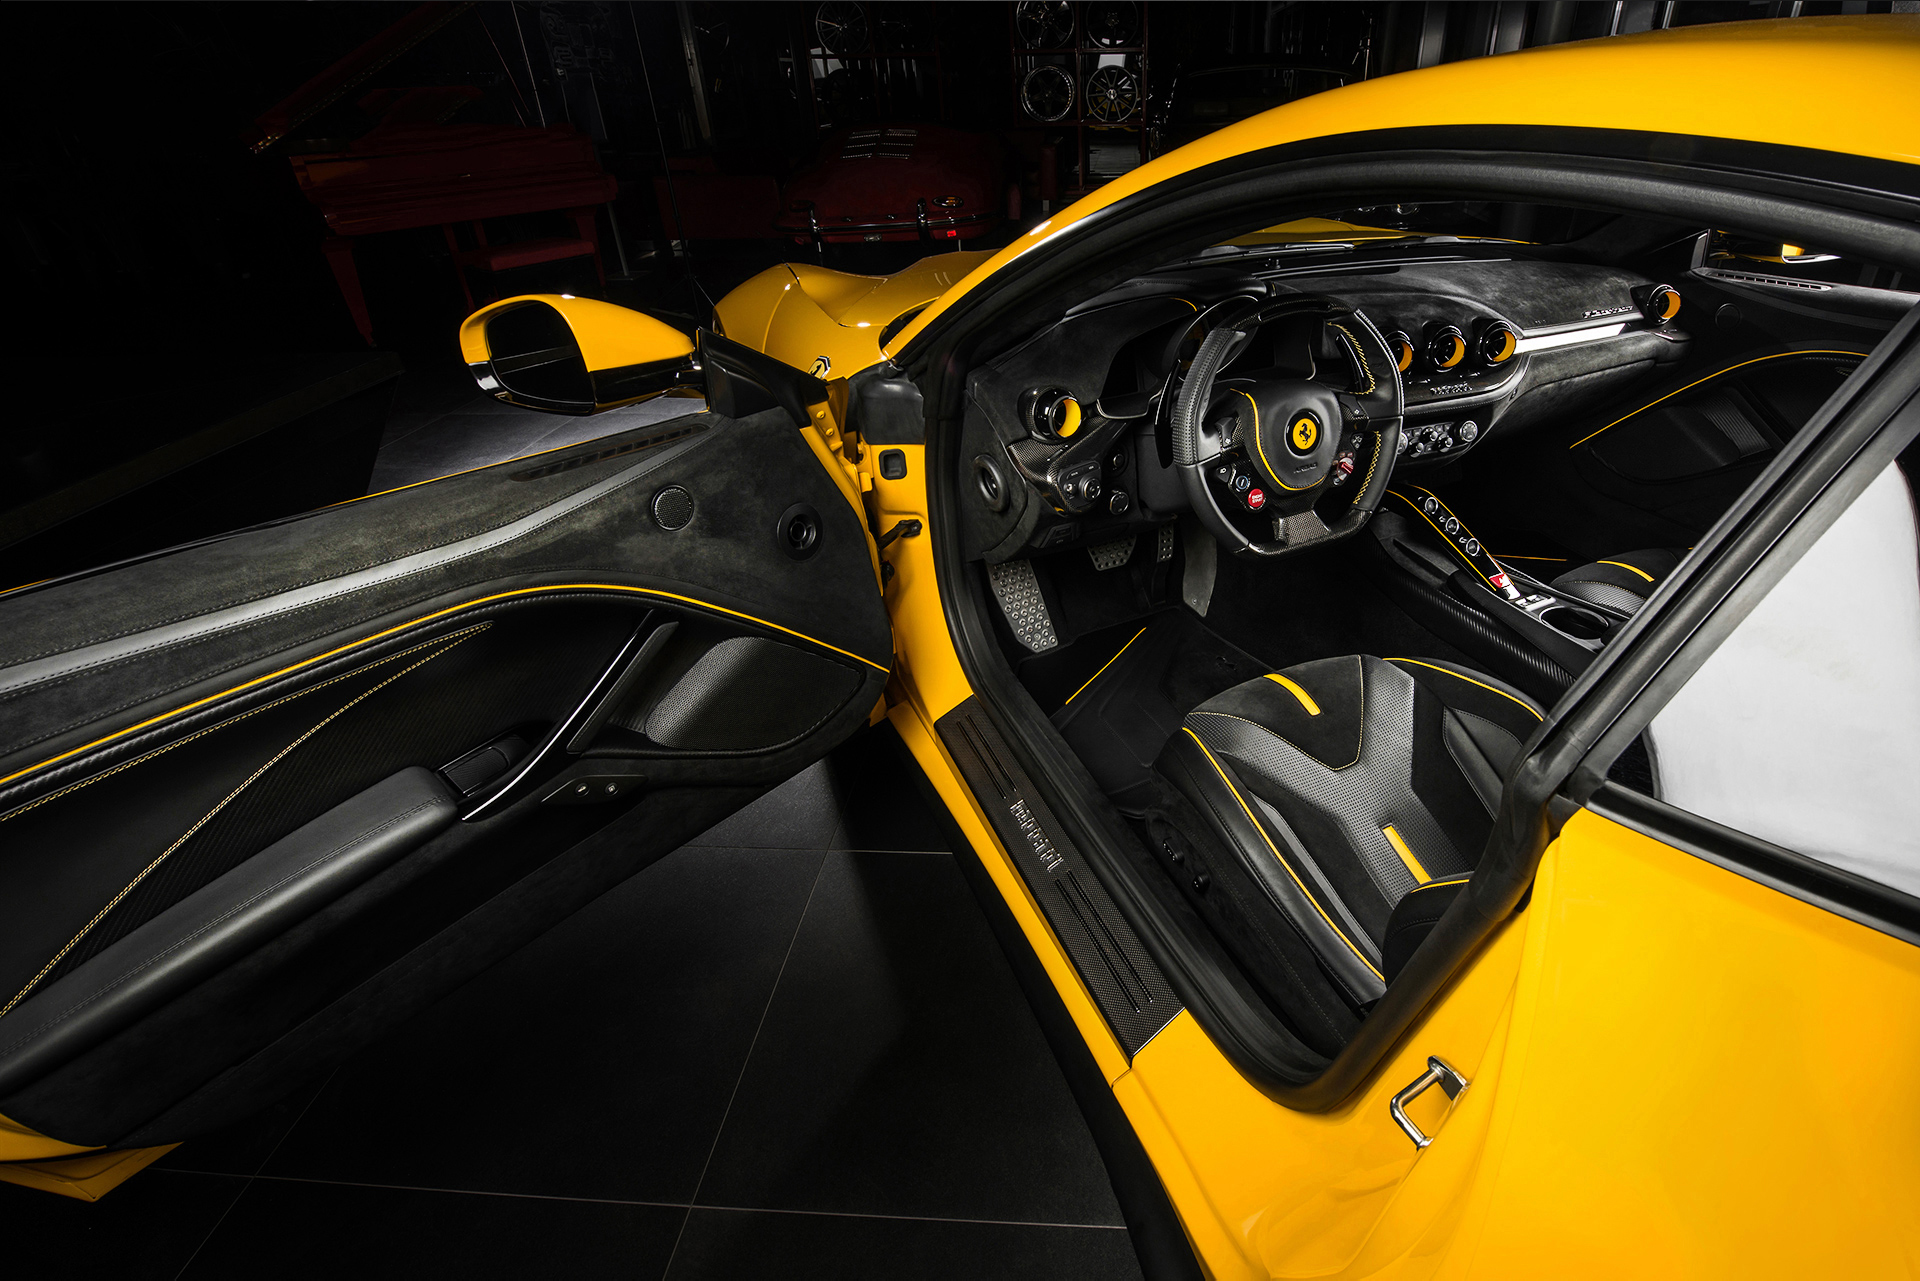 Ferrari F12 Berlinetta - Interior factory - Carlex Design